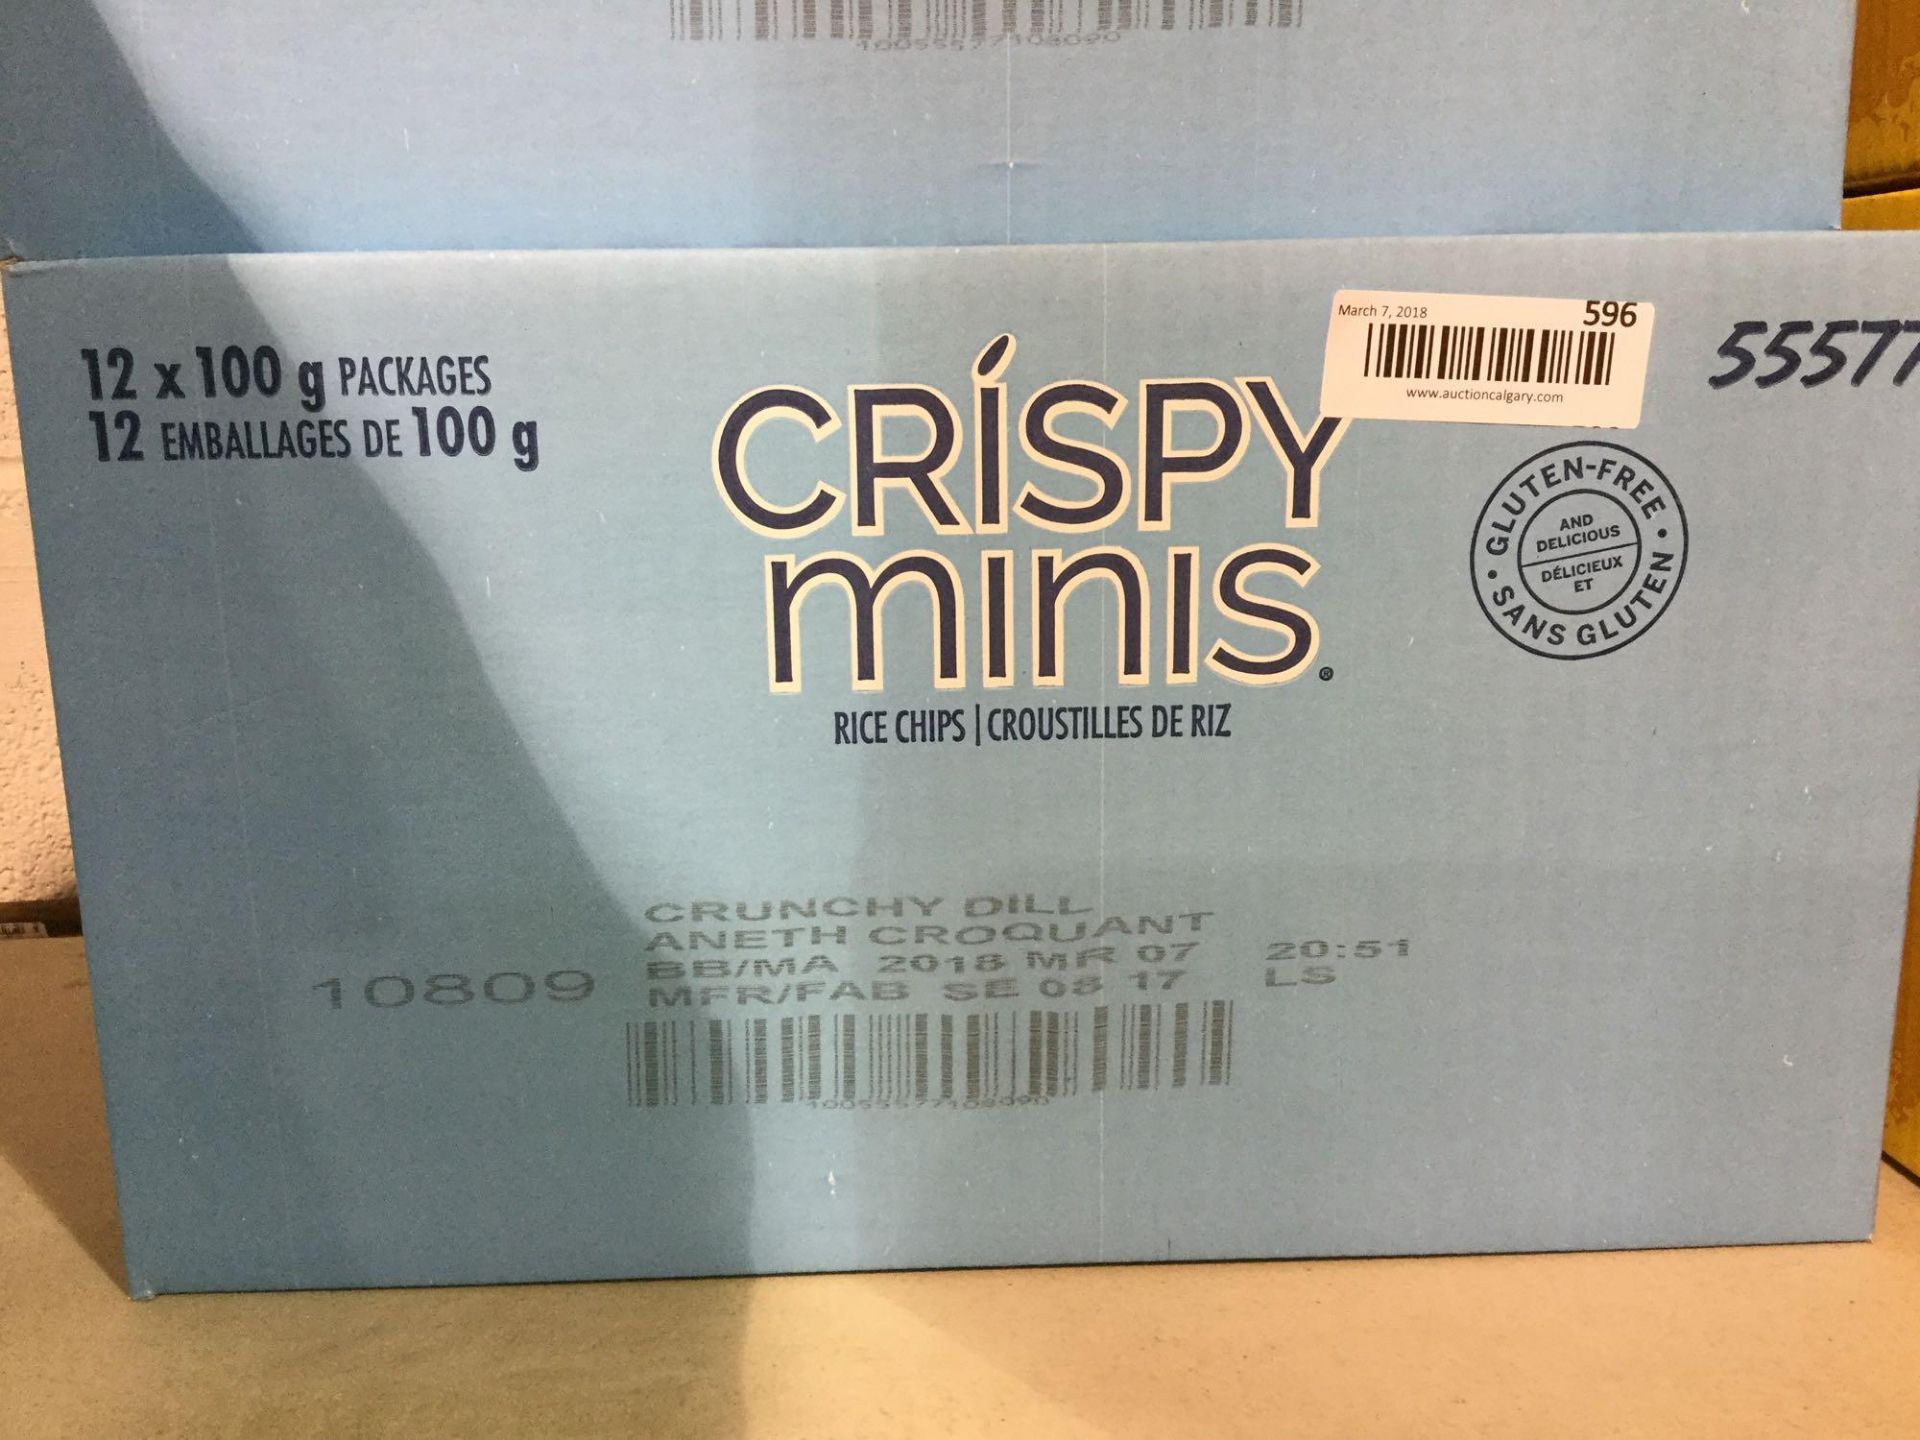 Case of 12 x 100 g Crispy Mini's Crunchy Dil